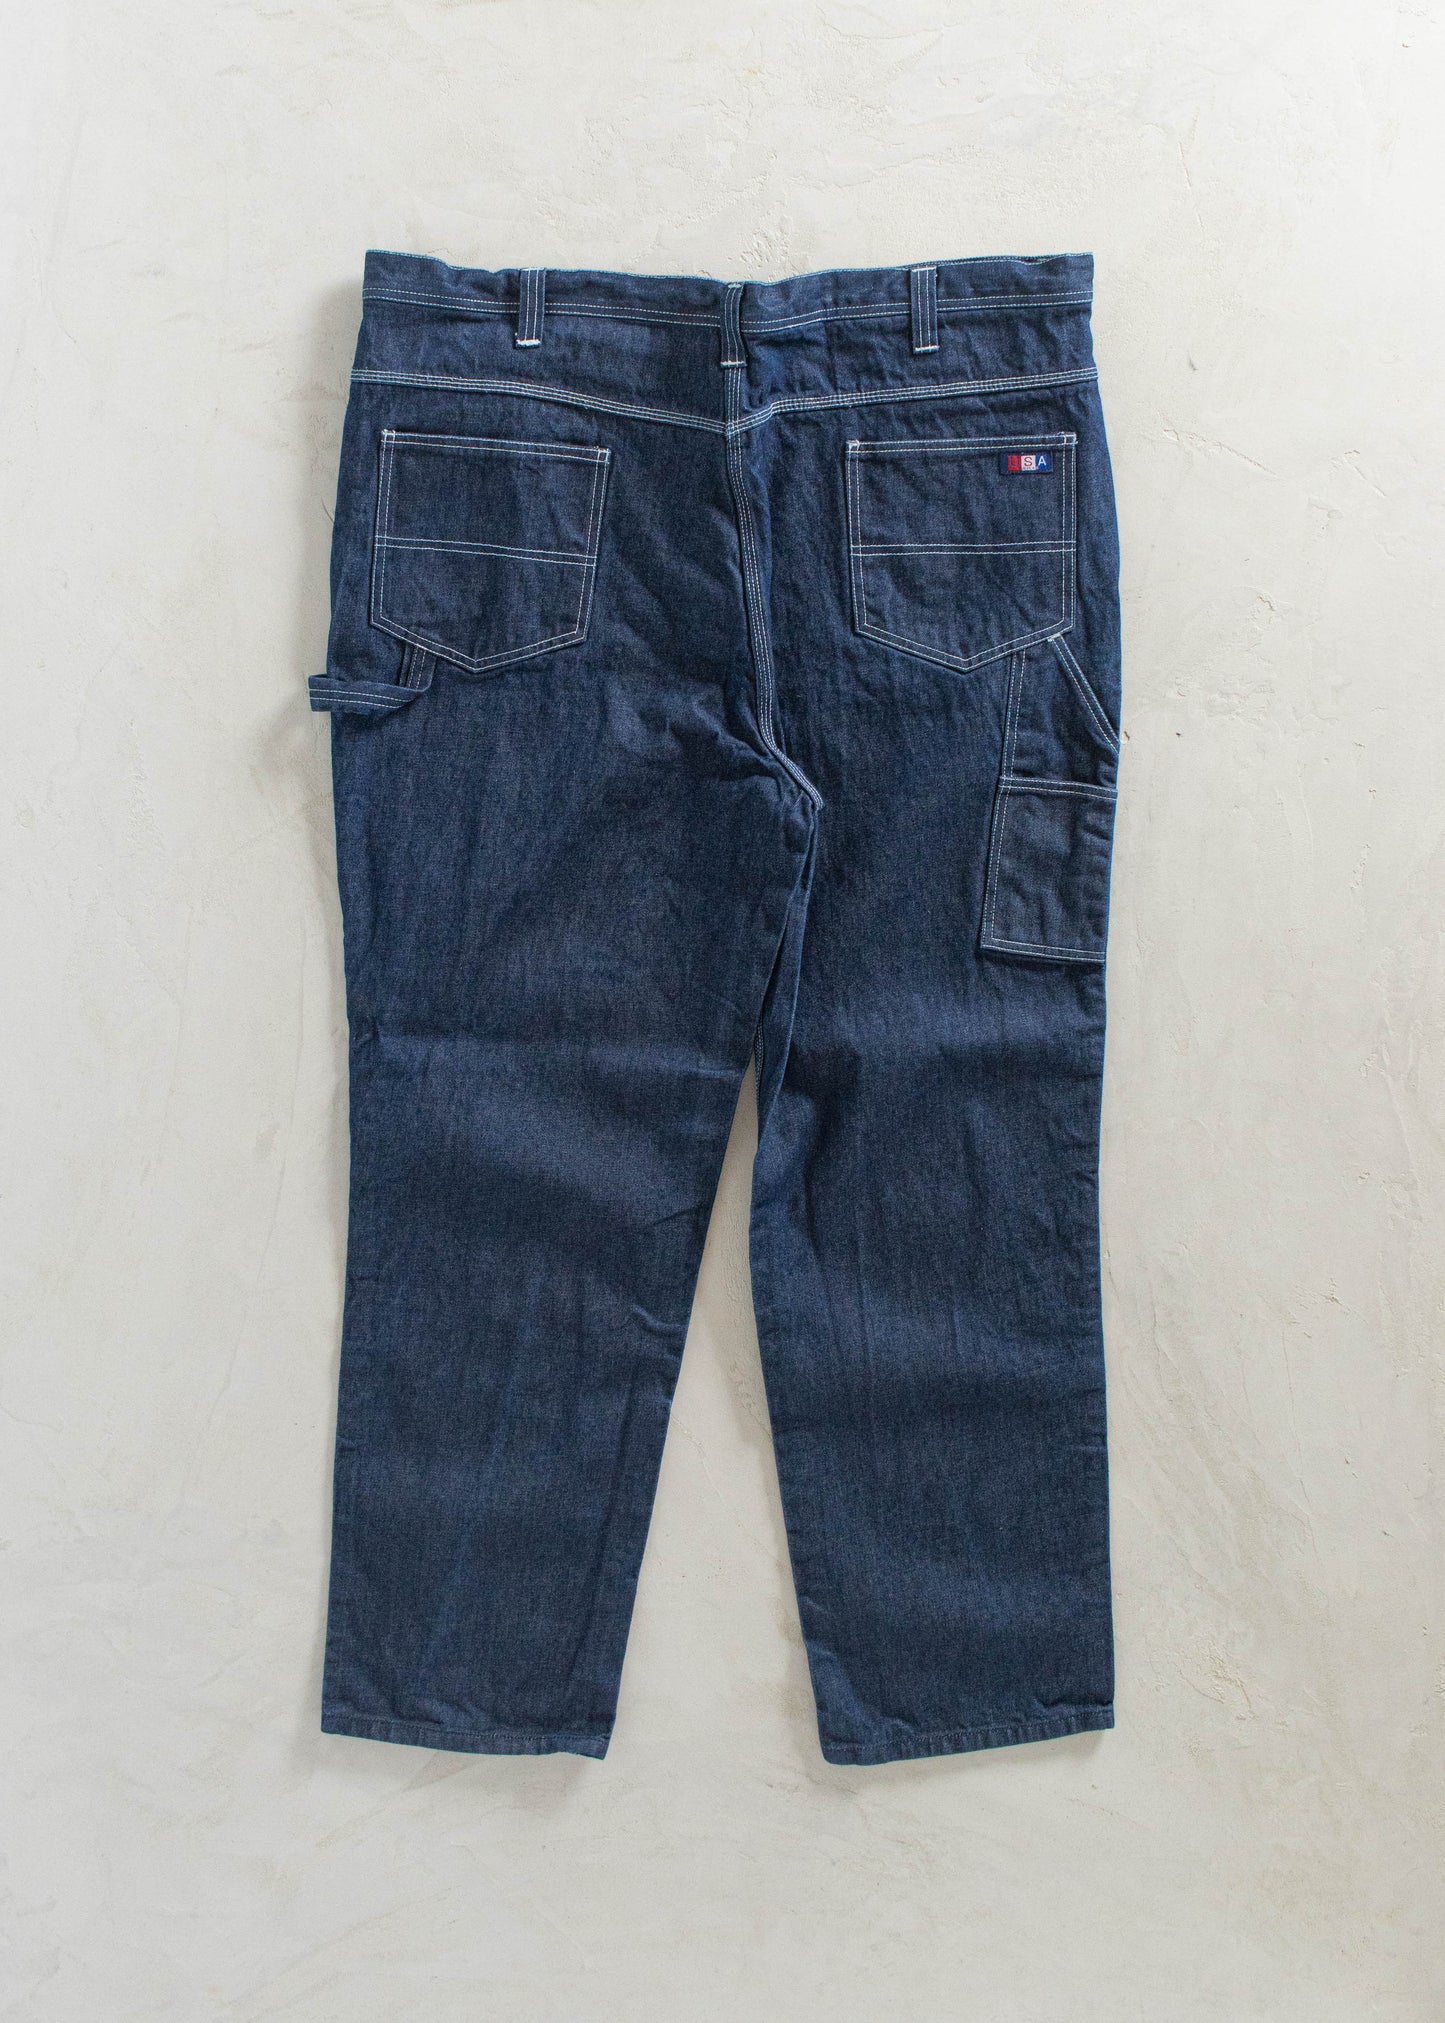 Vintage 1980s USA Works Deadstock Denim Carpenter Pants Size Women's 42 Men's 44